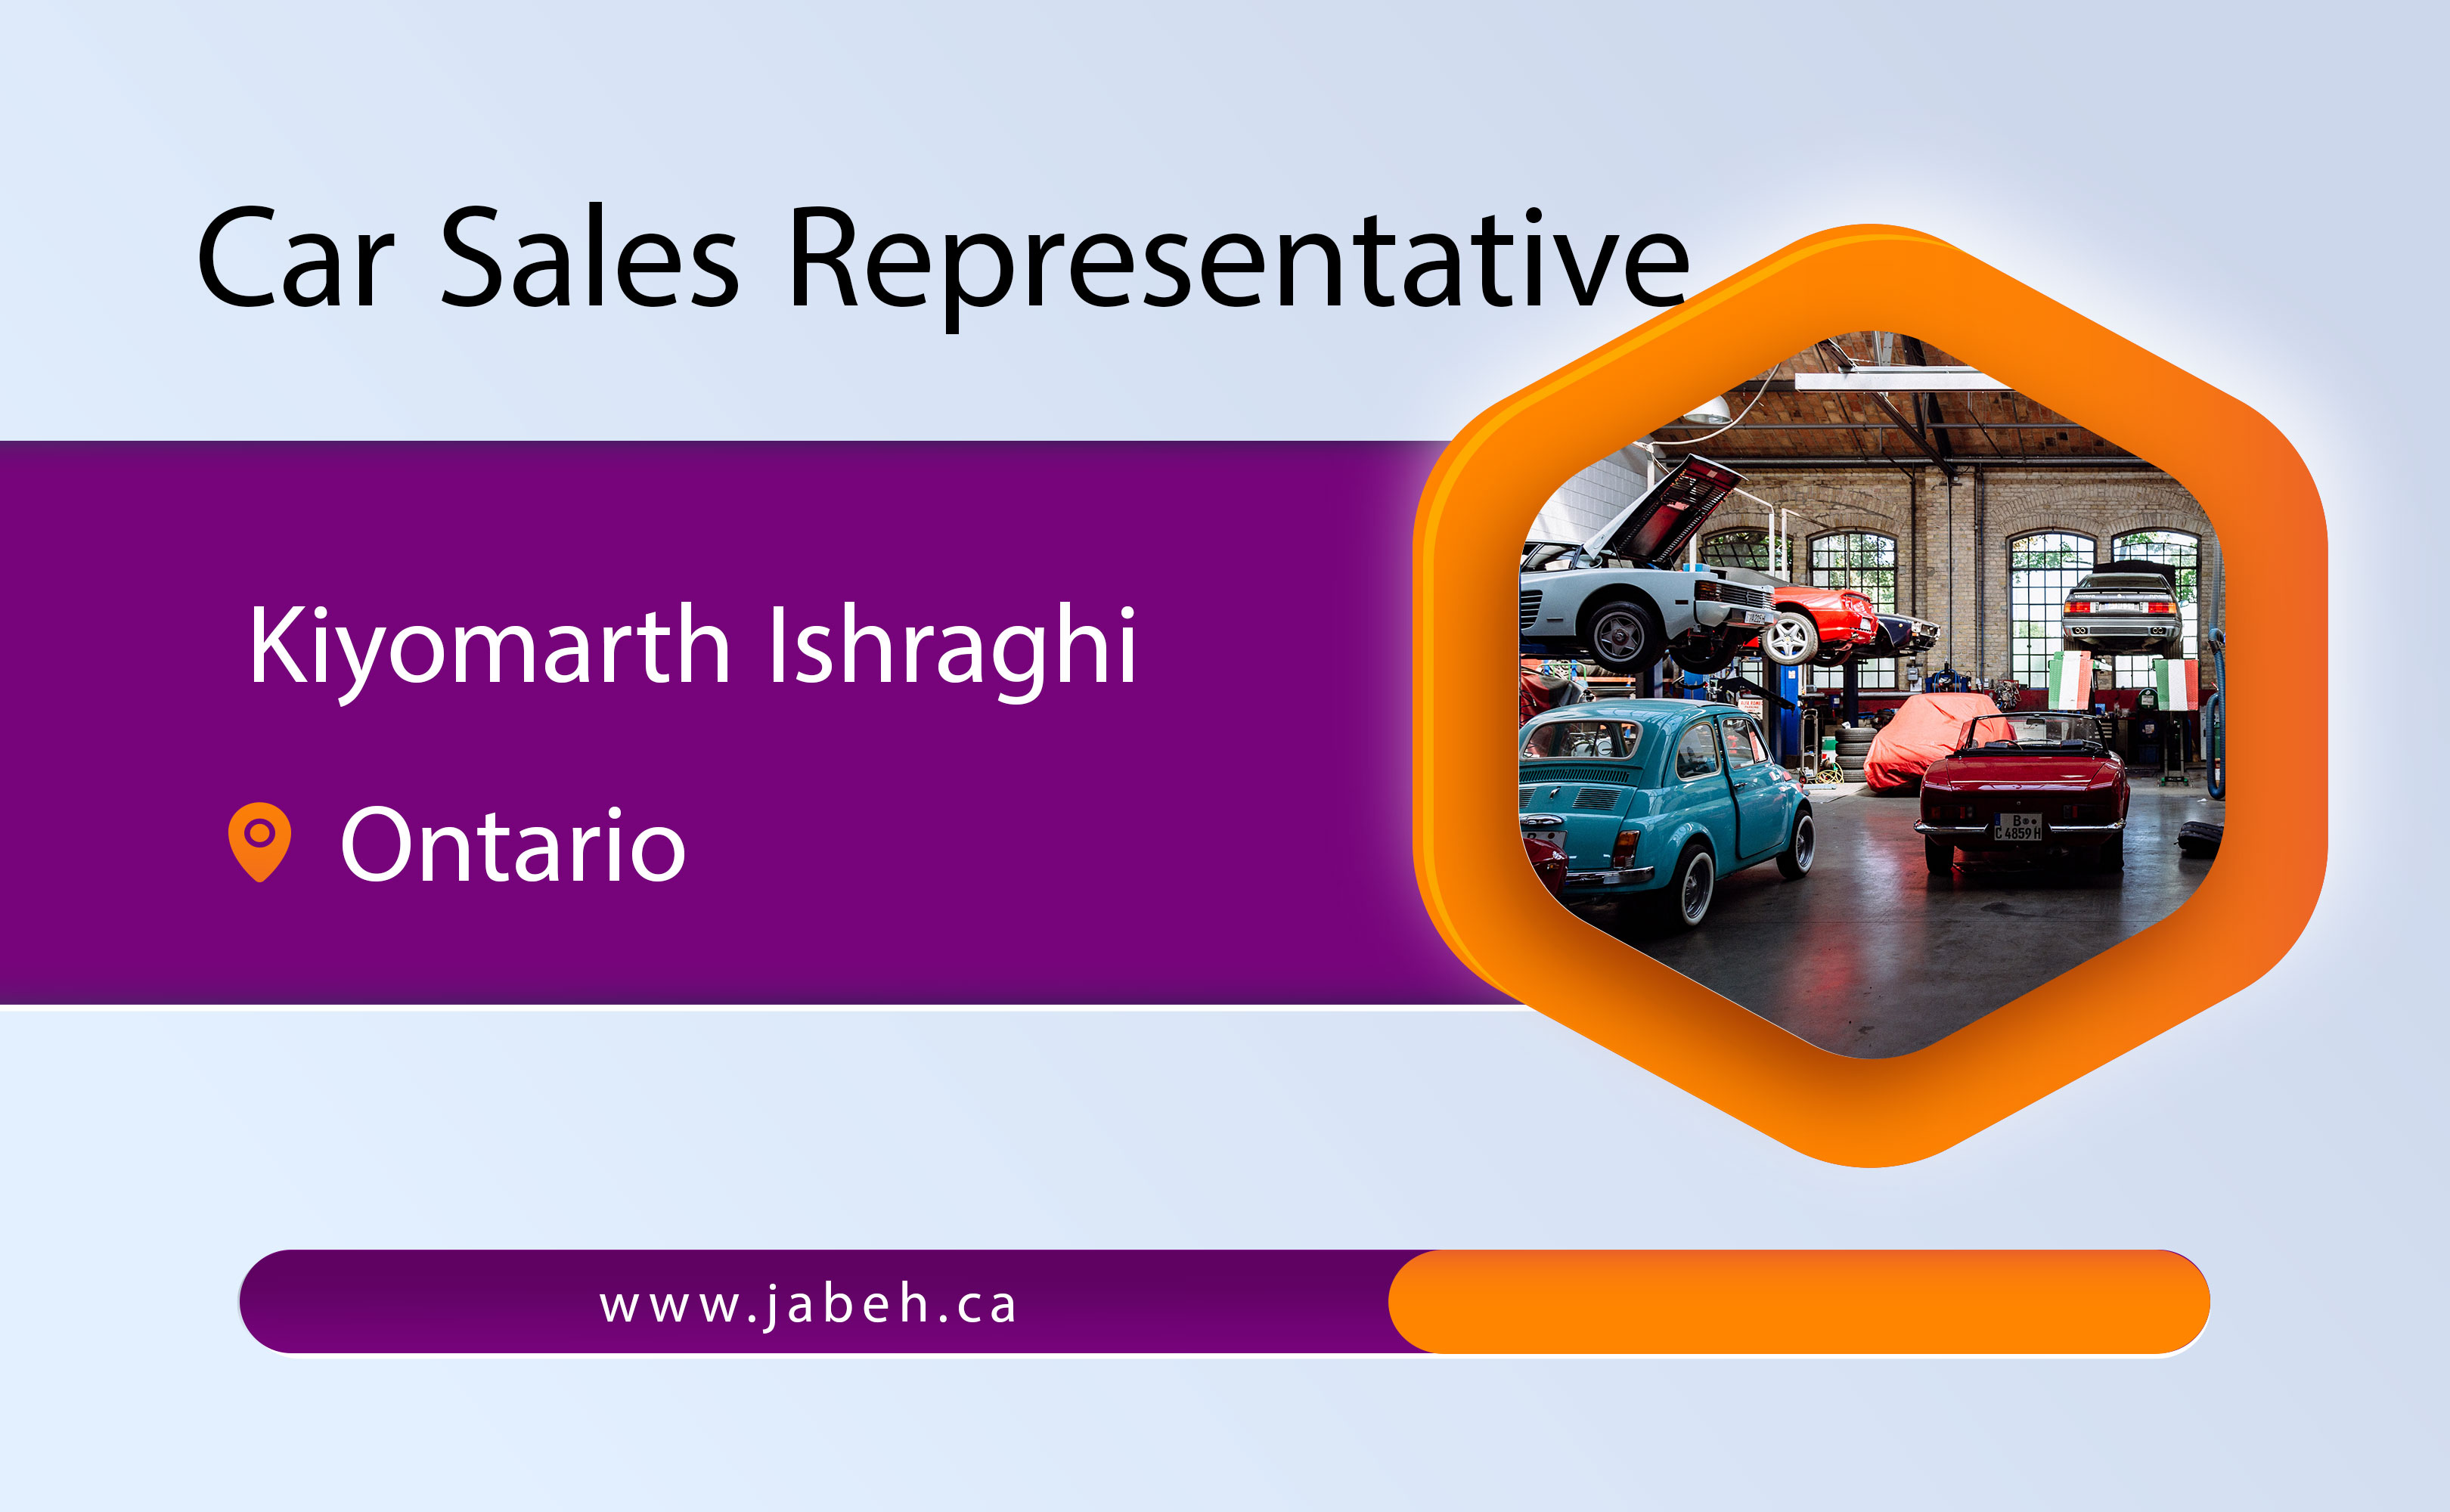 Iranian sales representative of Kyomarth Eshraghi cars in Ontario